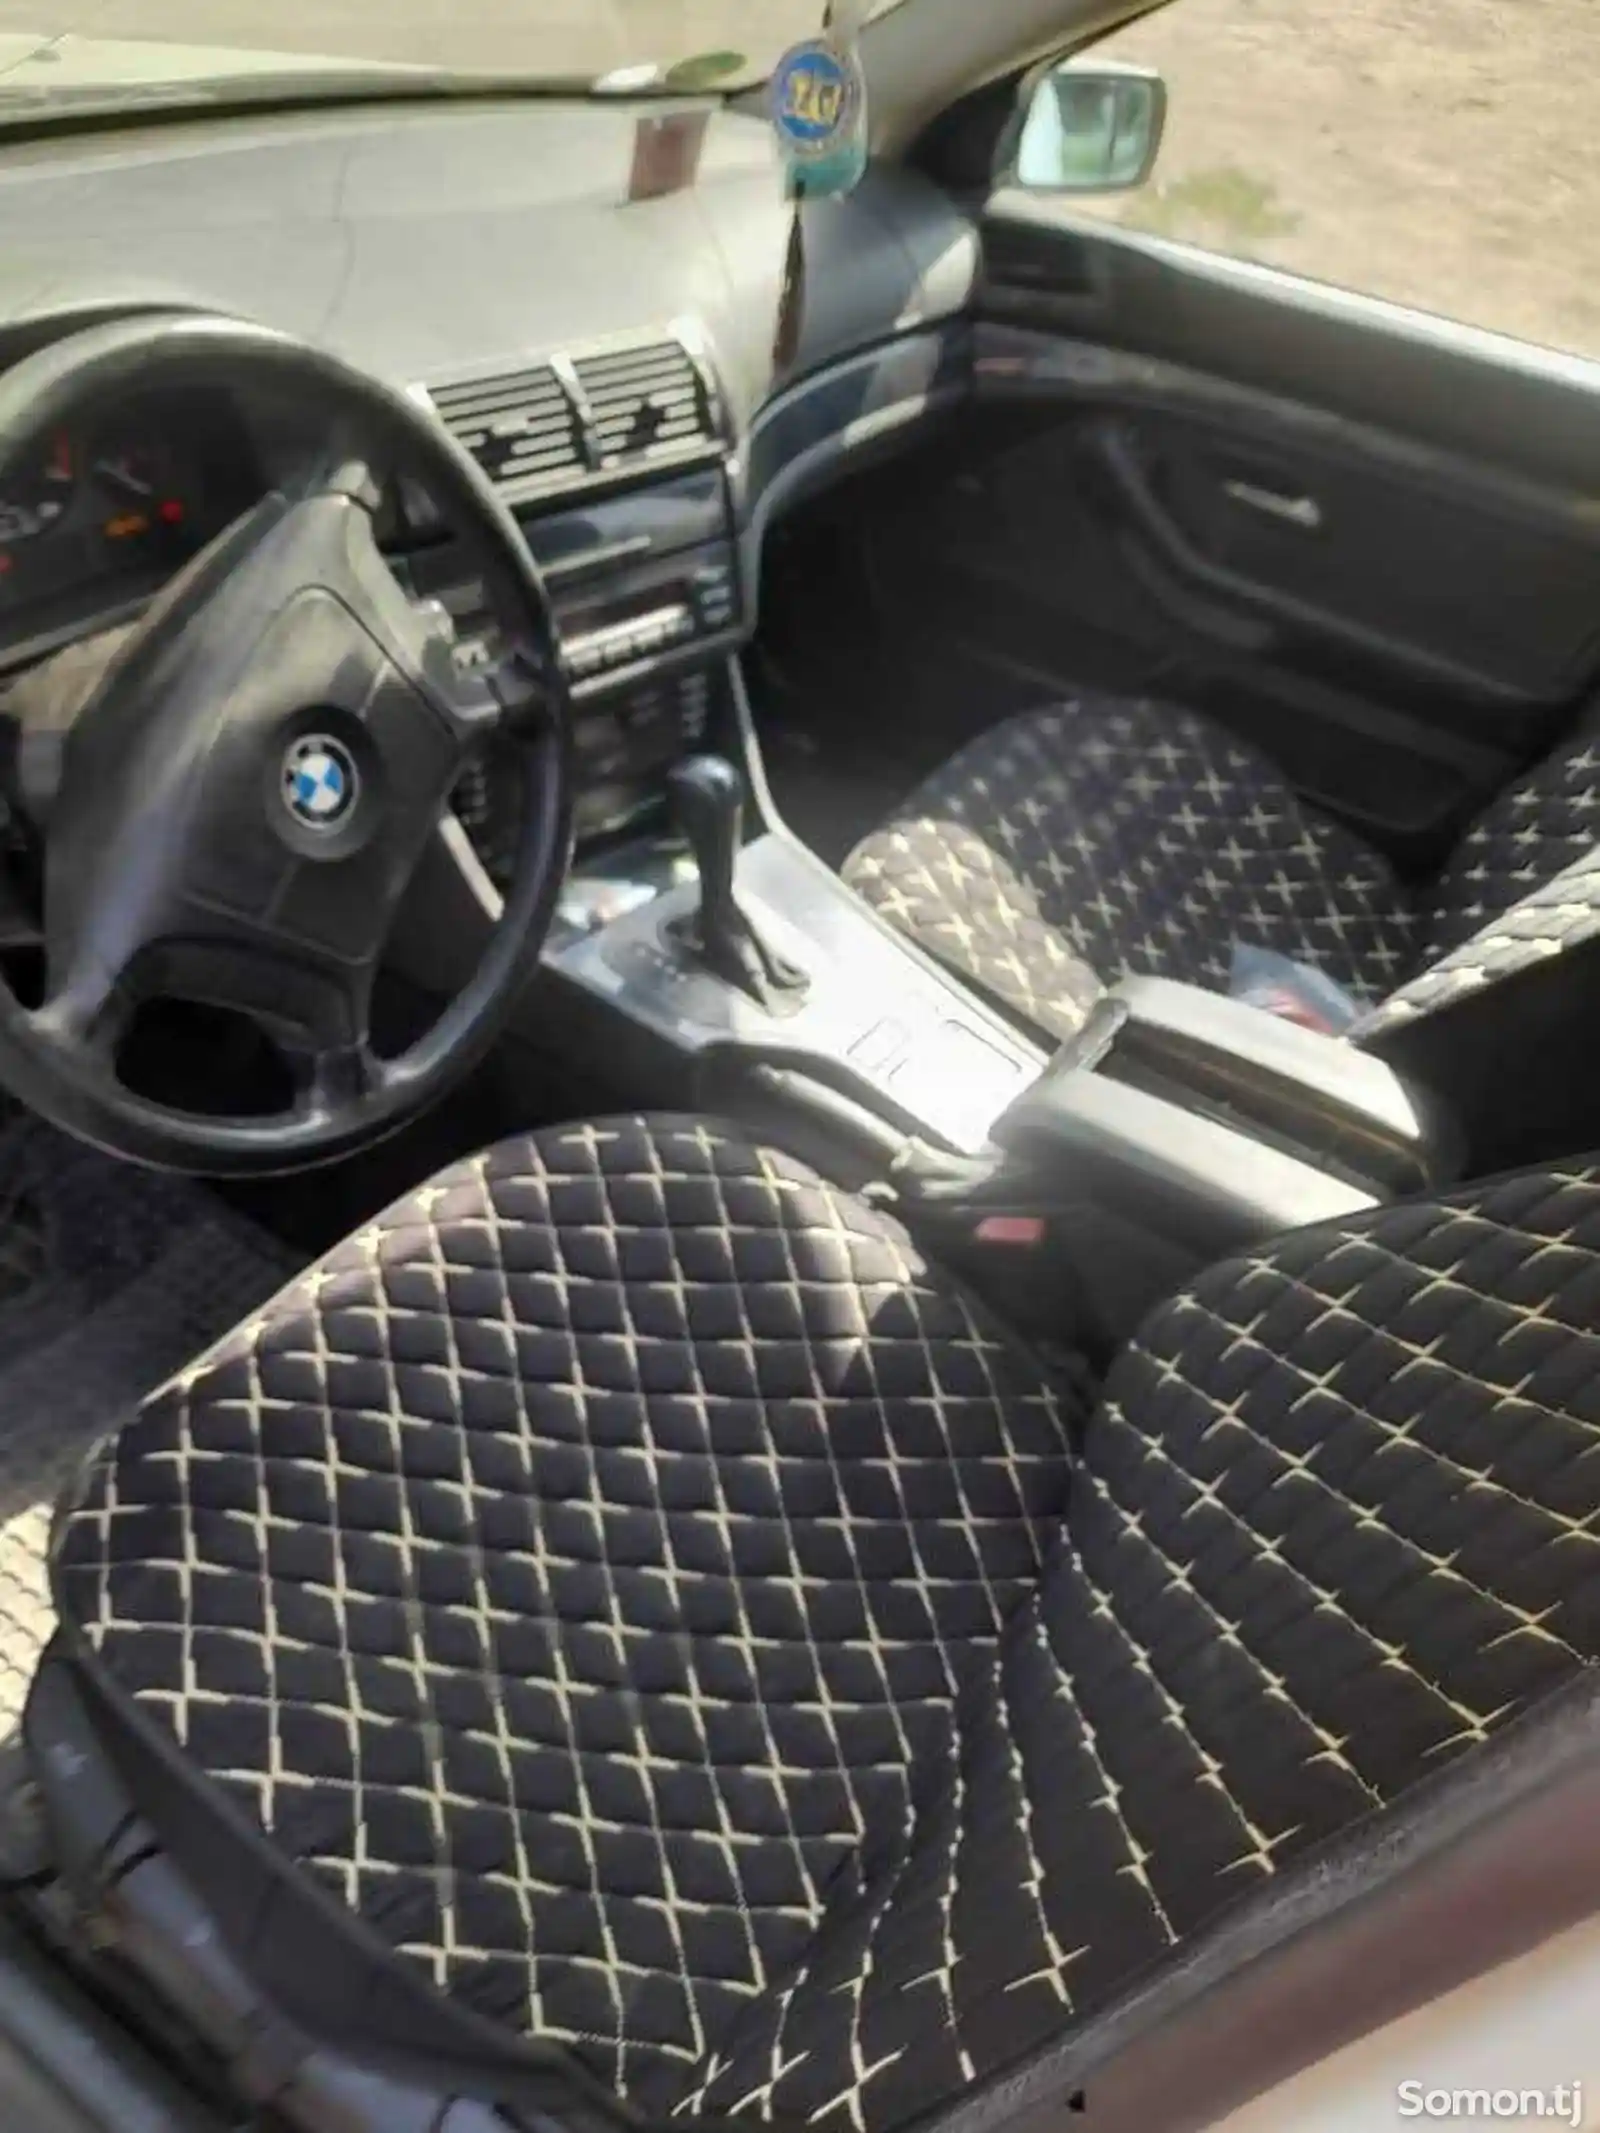 BMW 5 series, 1997-5